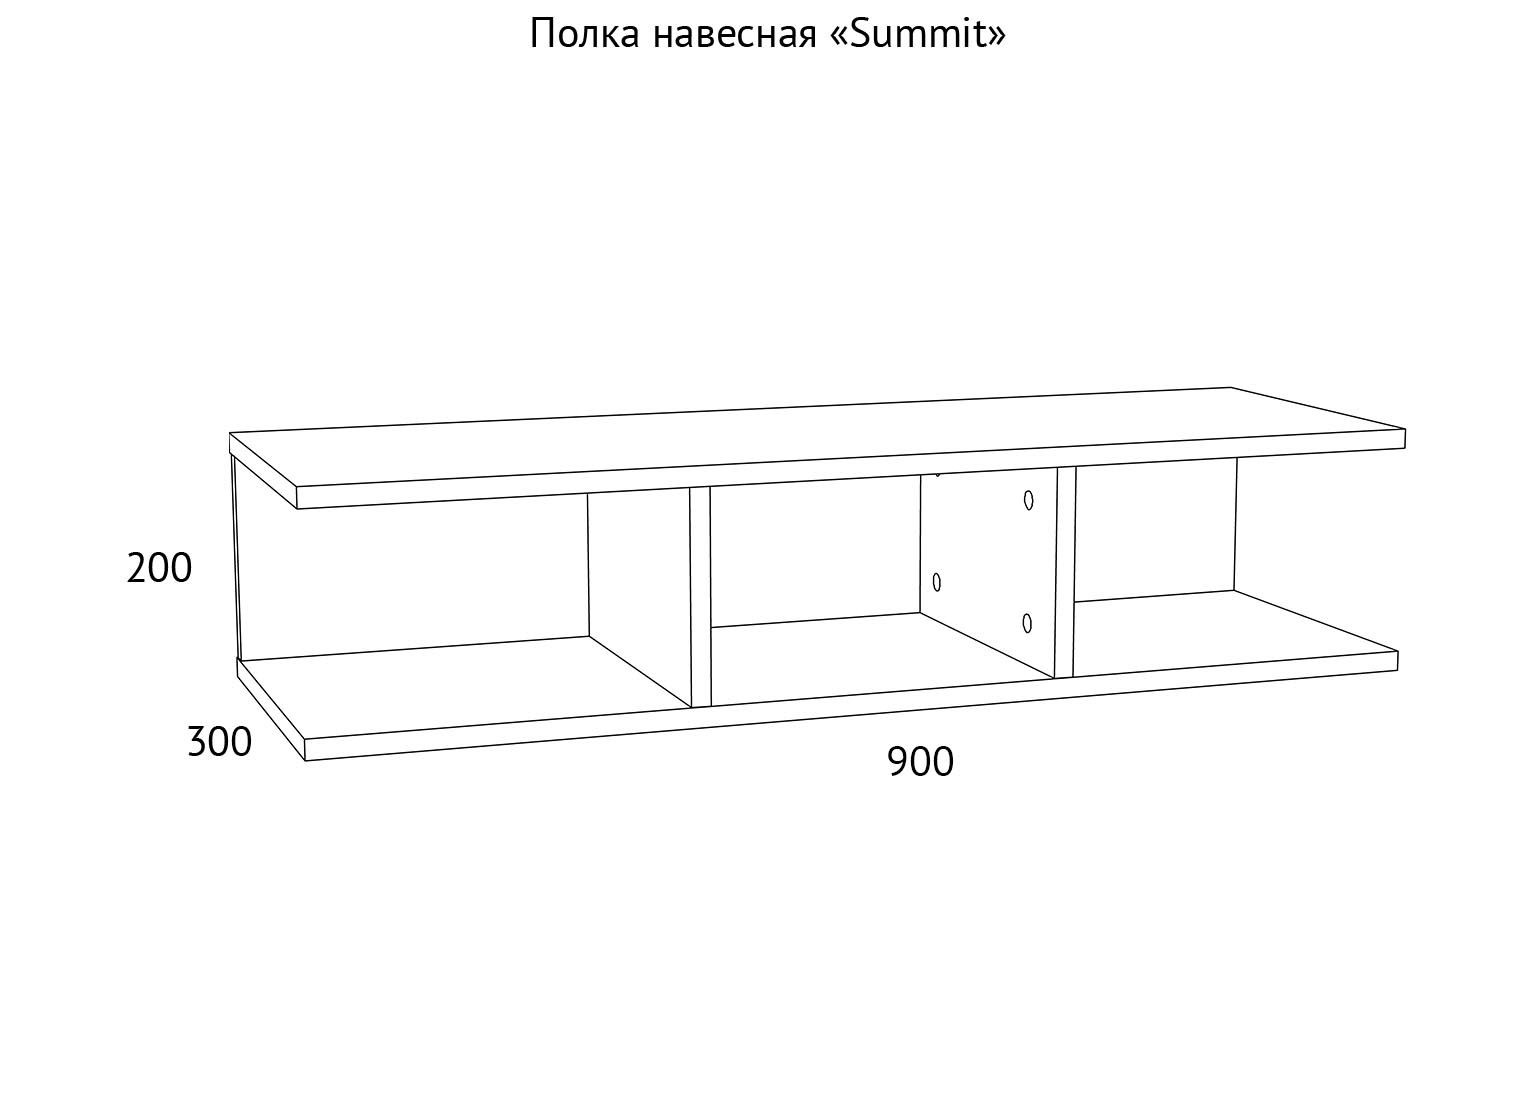 НМ 011.92-01 Полка навесная Summit схема Мебель Краснодар